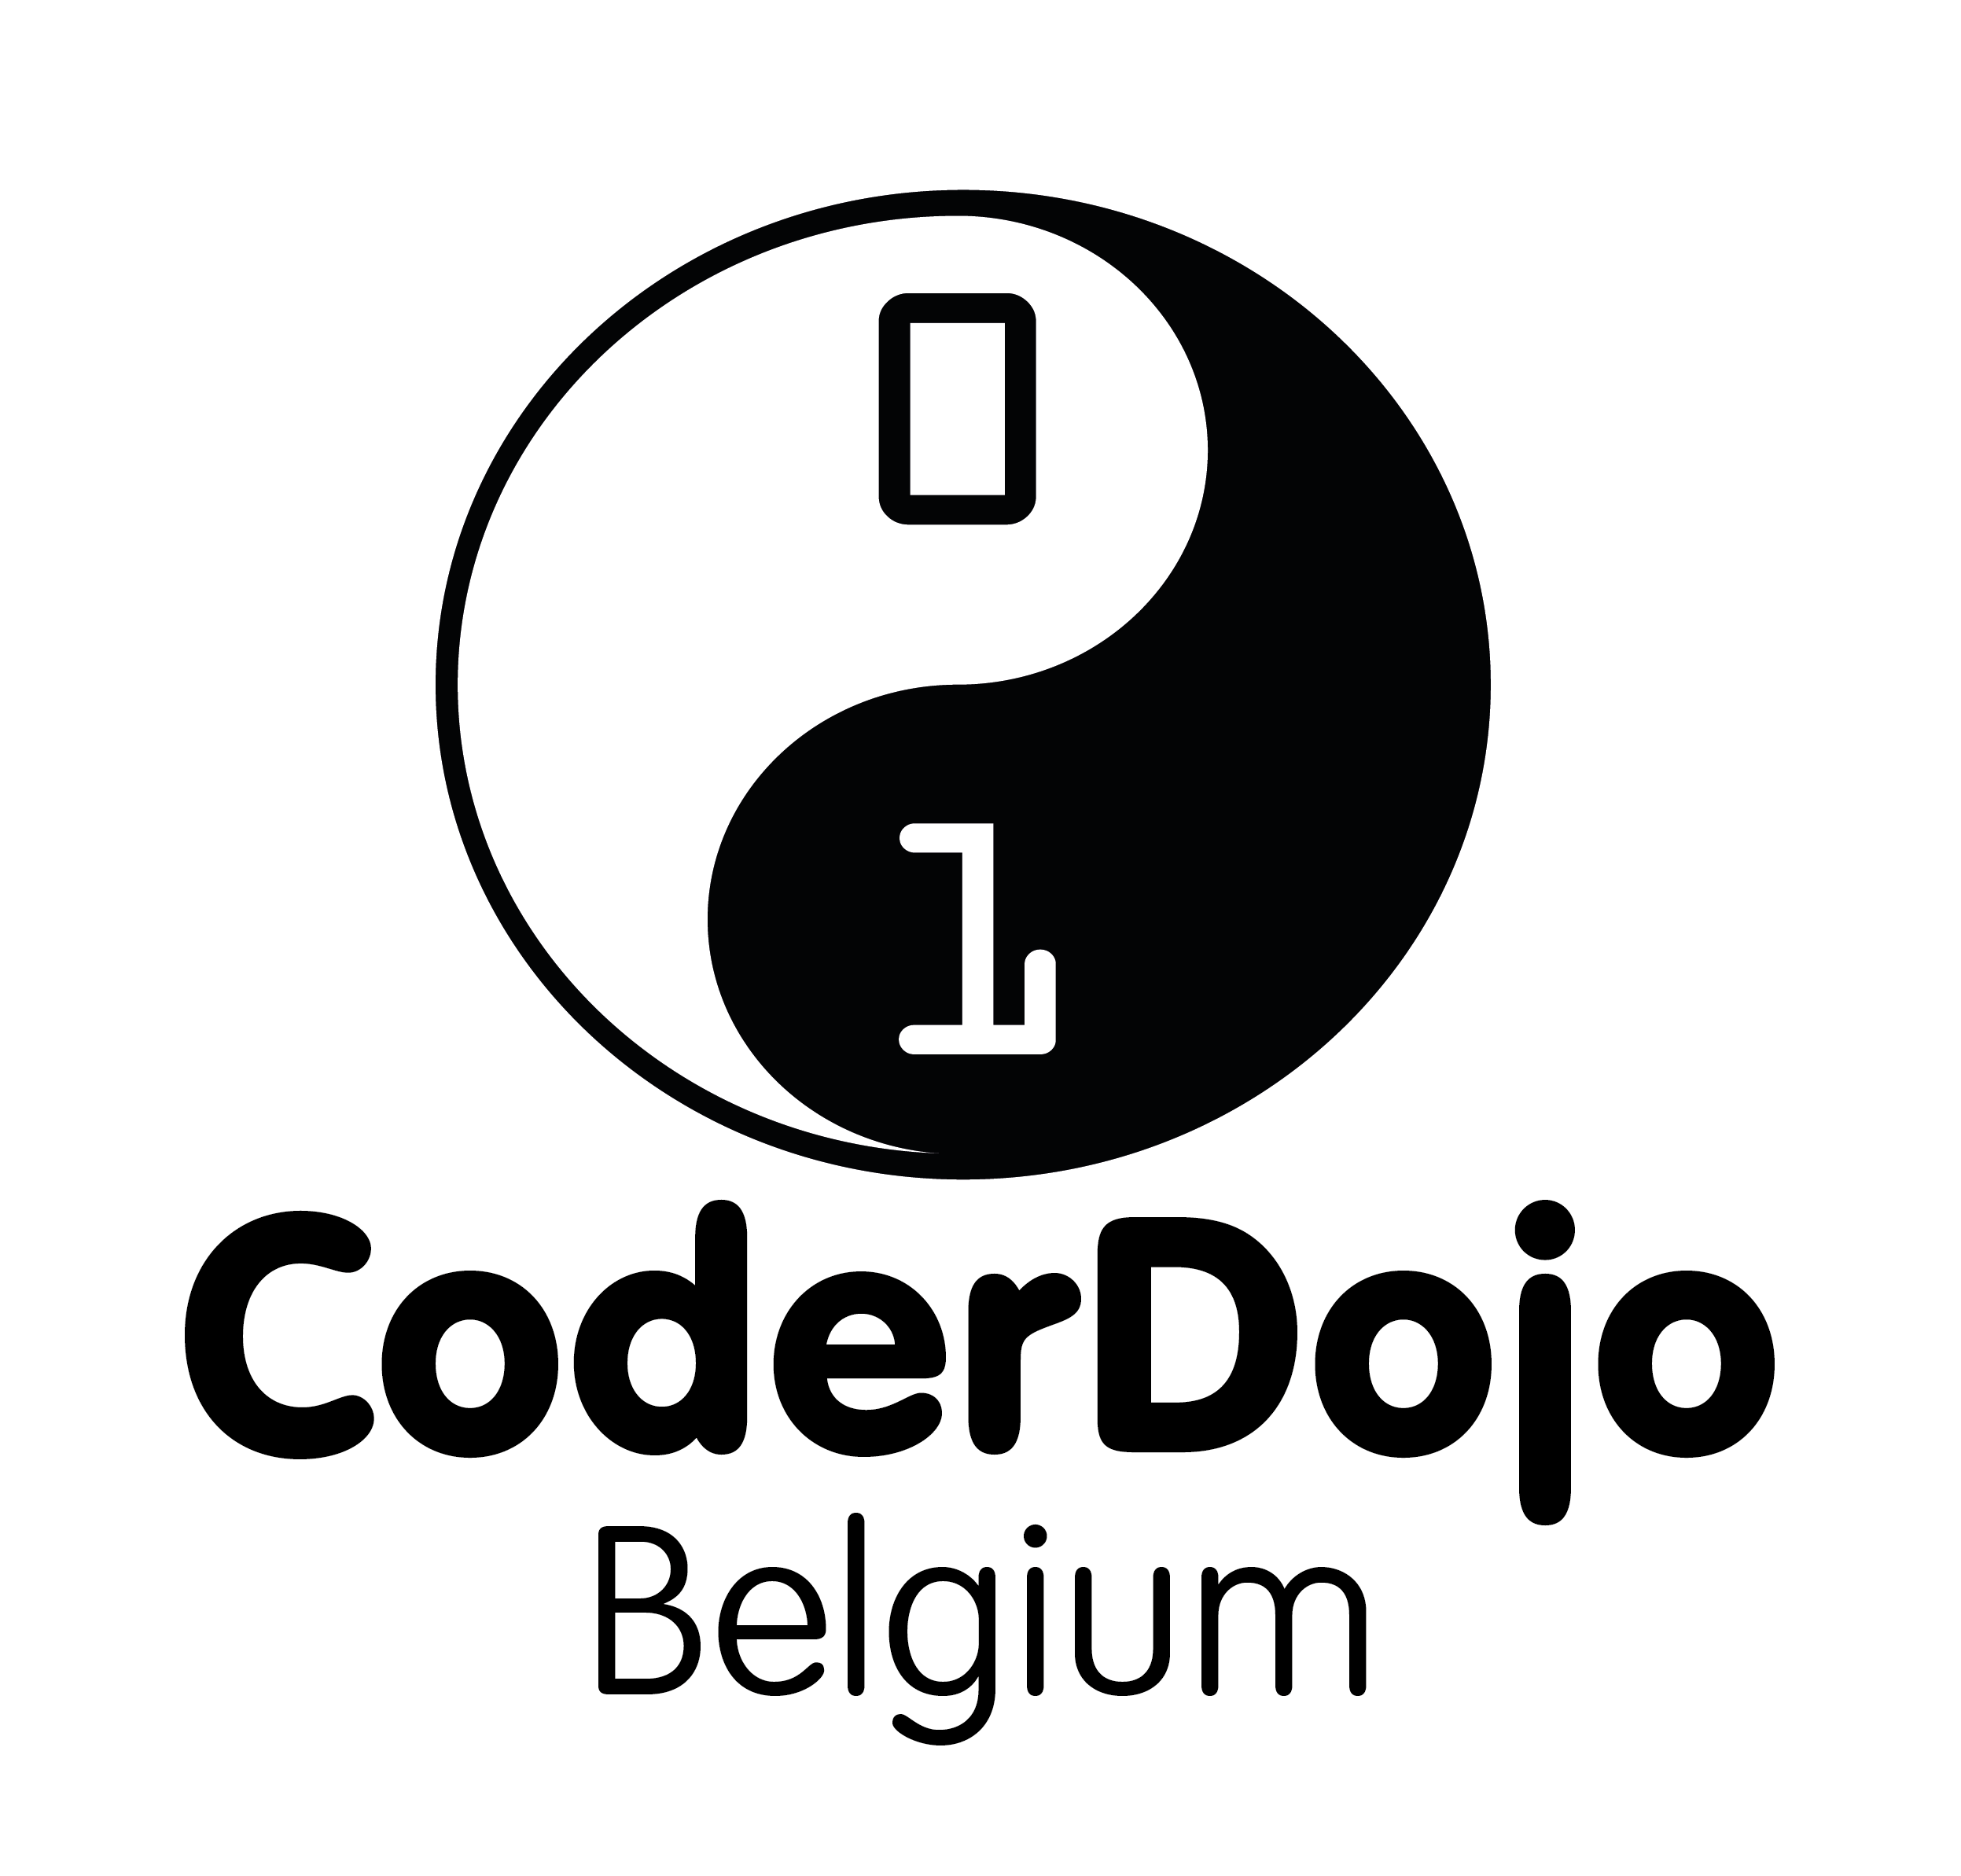 CoderDojo Belgium logo